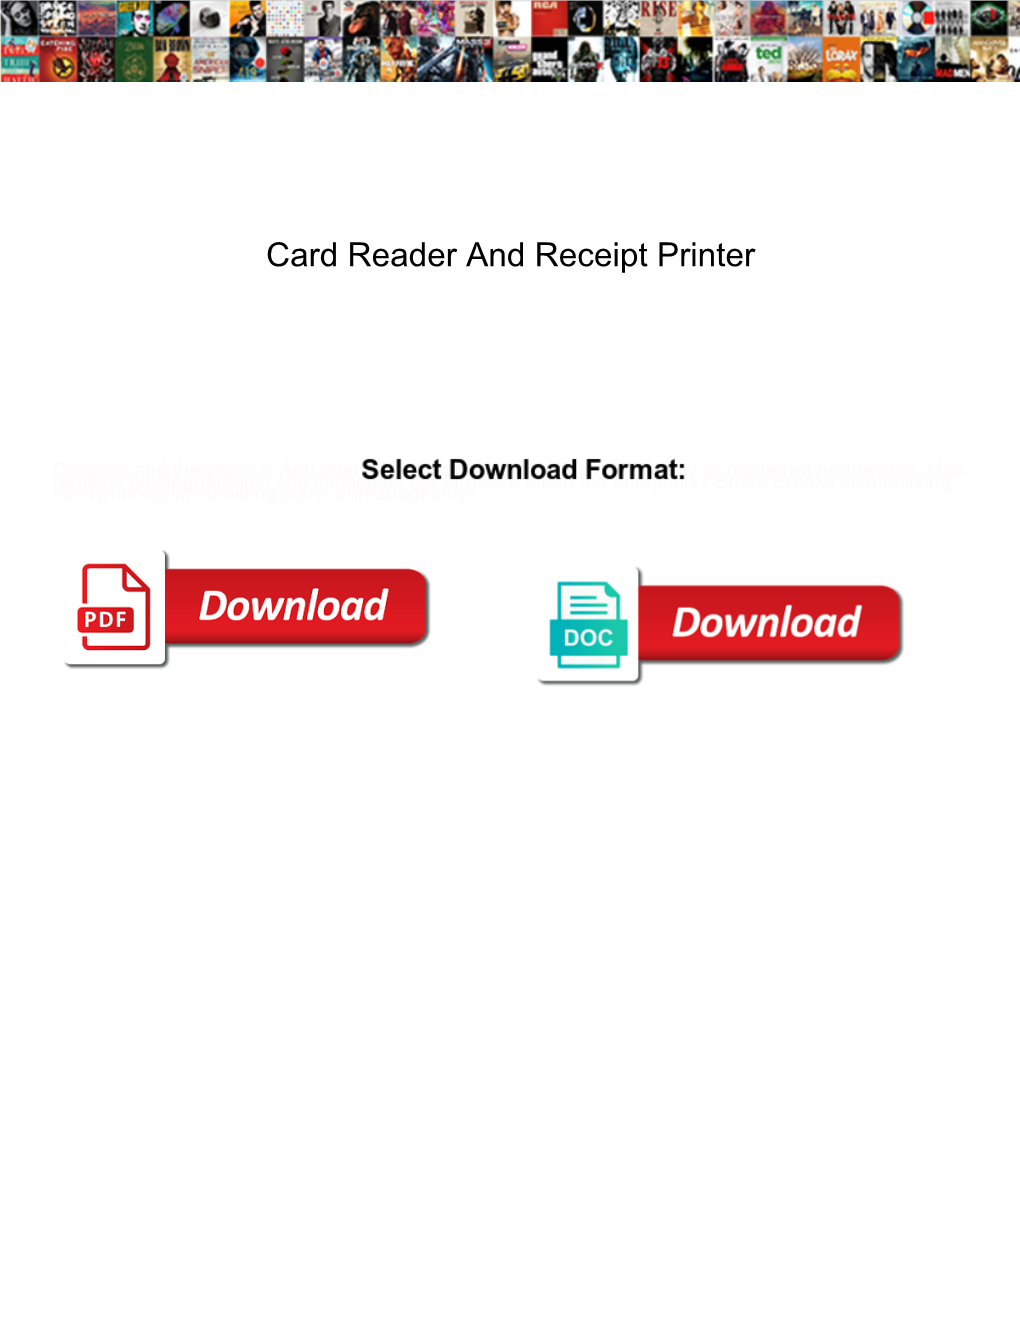 Card Reader and Receipt Printer